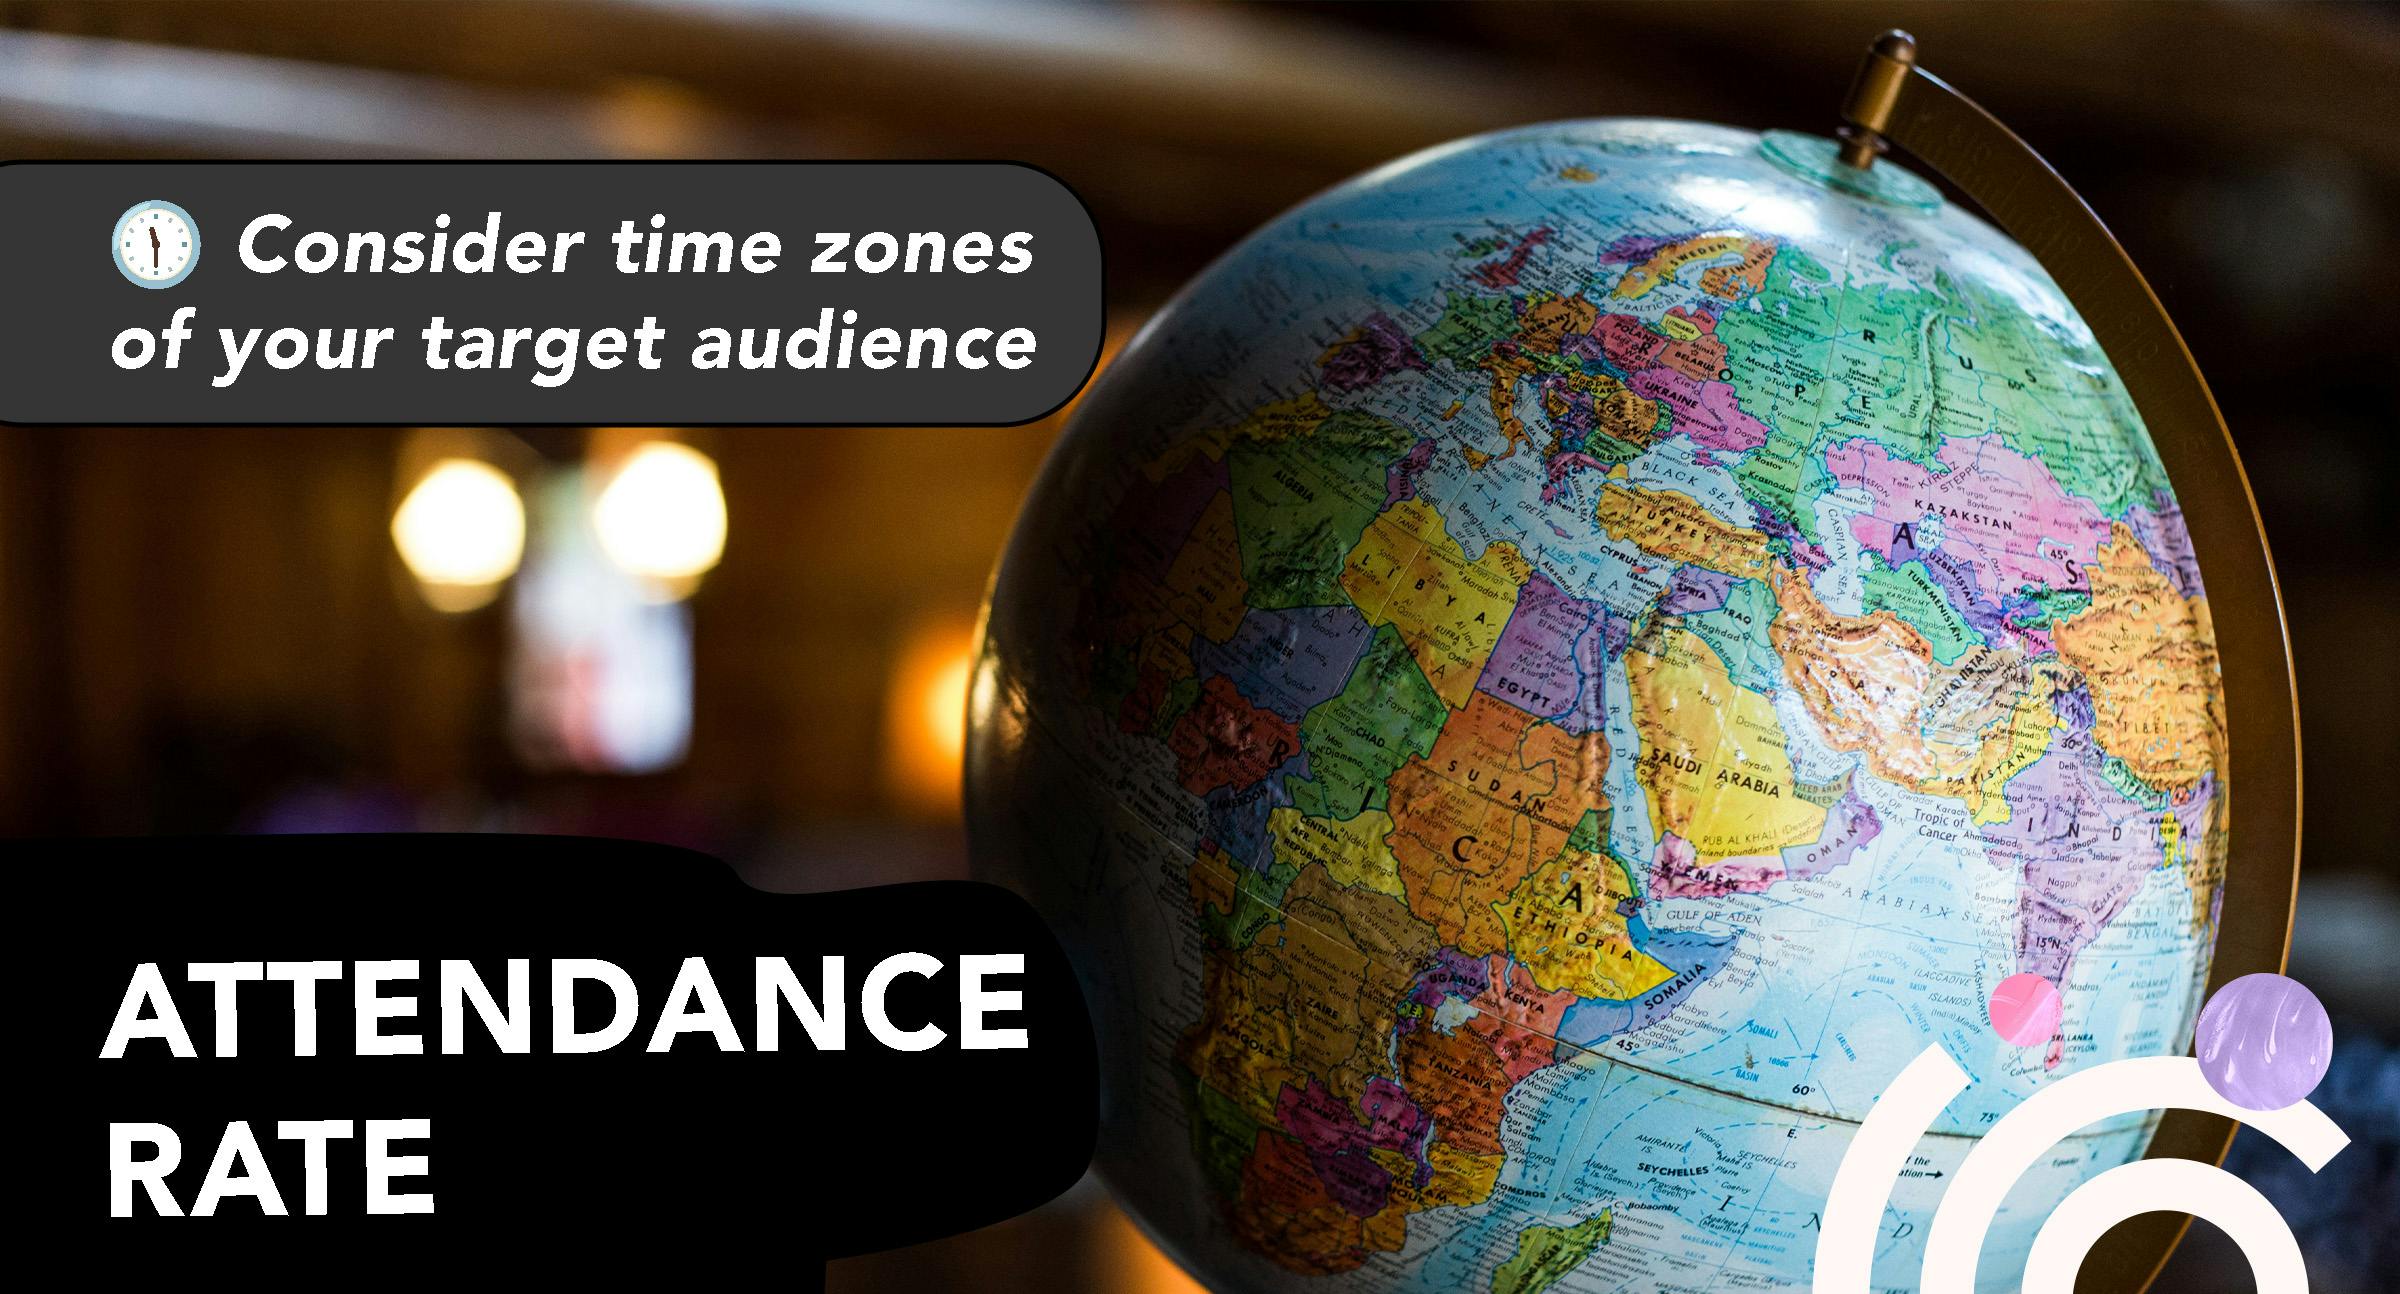 Webinar attendance rate - Time zones